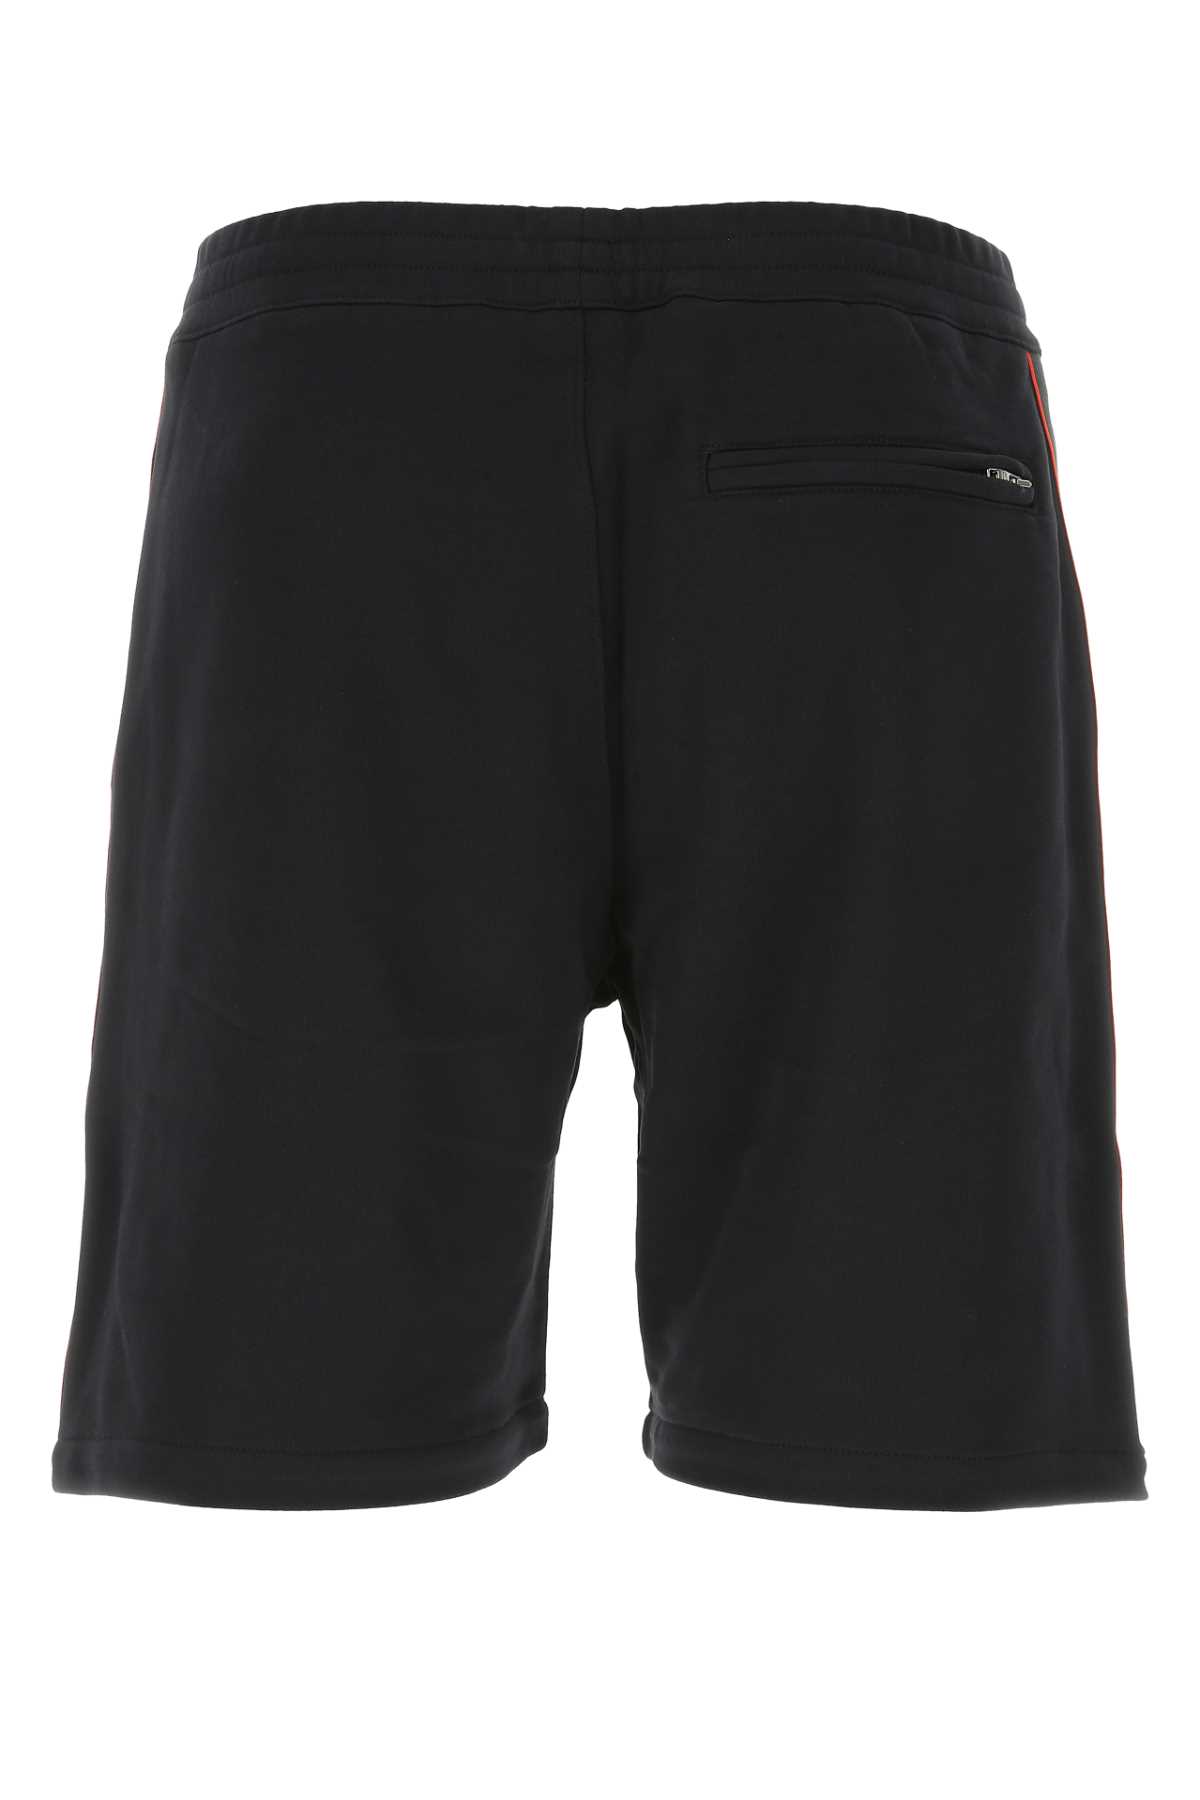 Alexander Mcqueen Black Cotton Bermuda Shorts In 0901